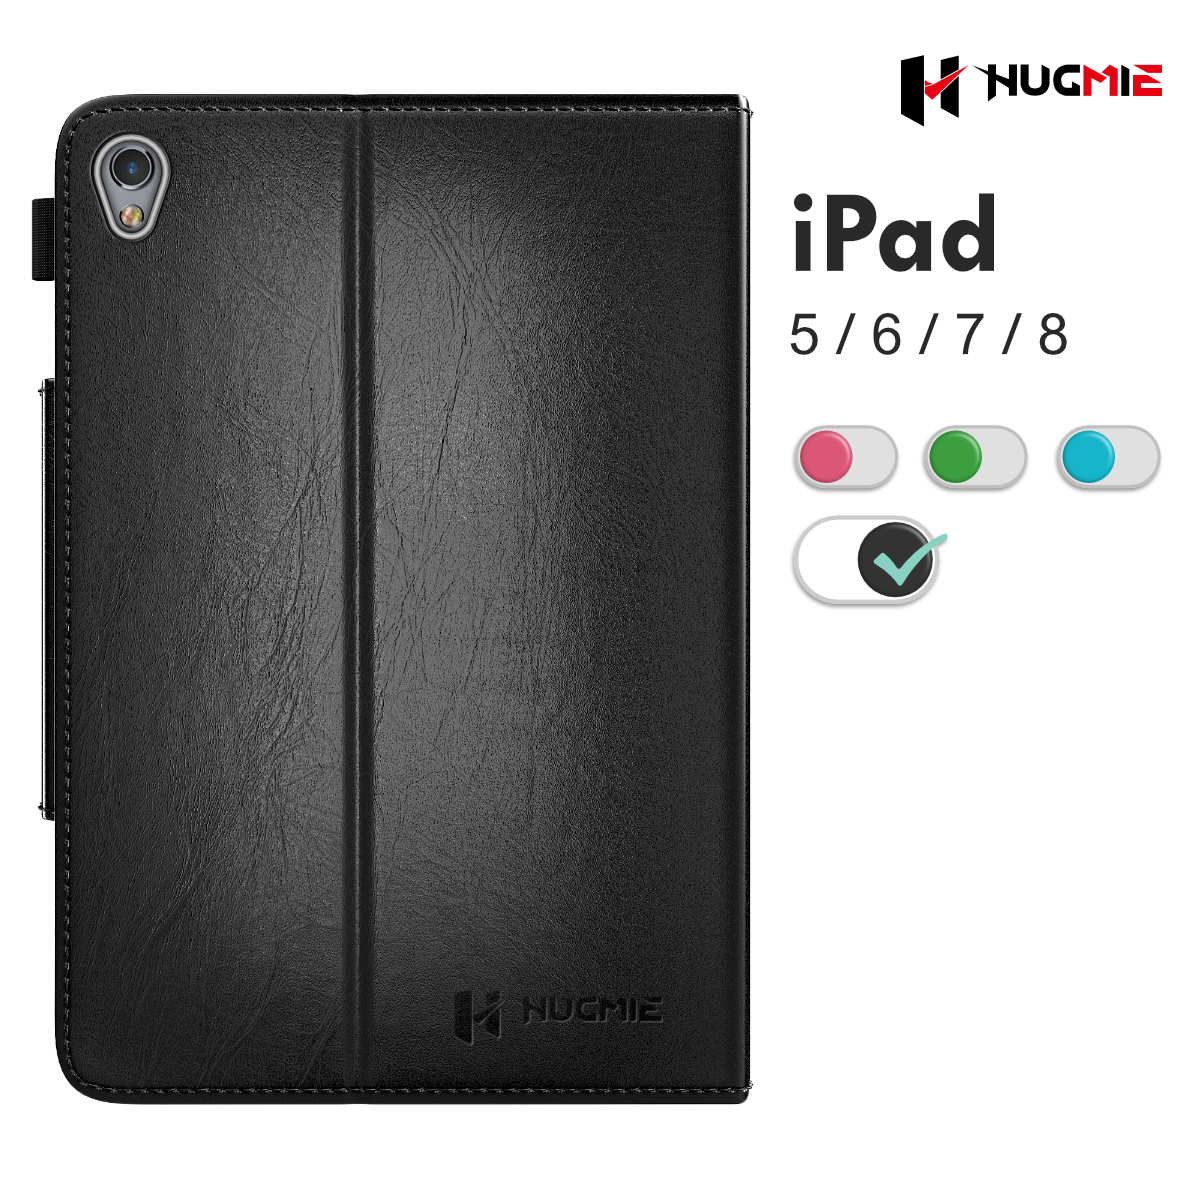 iPad 5/6/7/8 Leather Folio Case Sensation Series | Hugmie